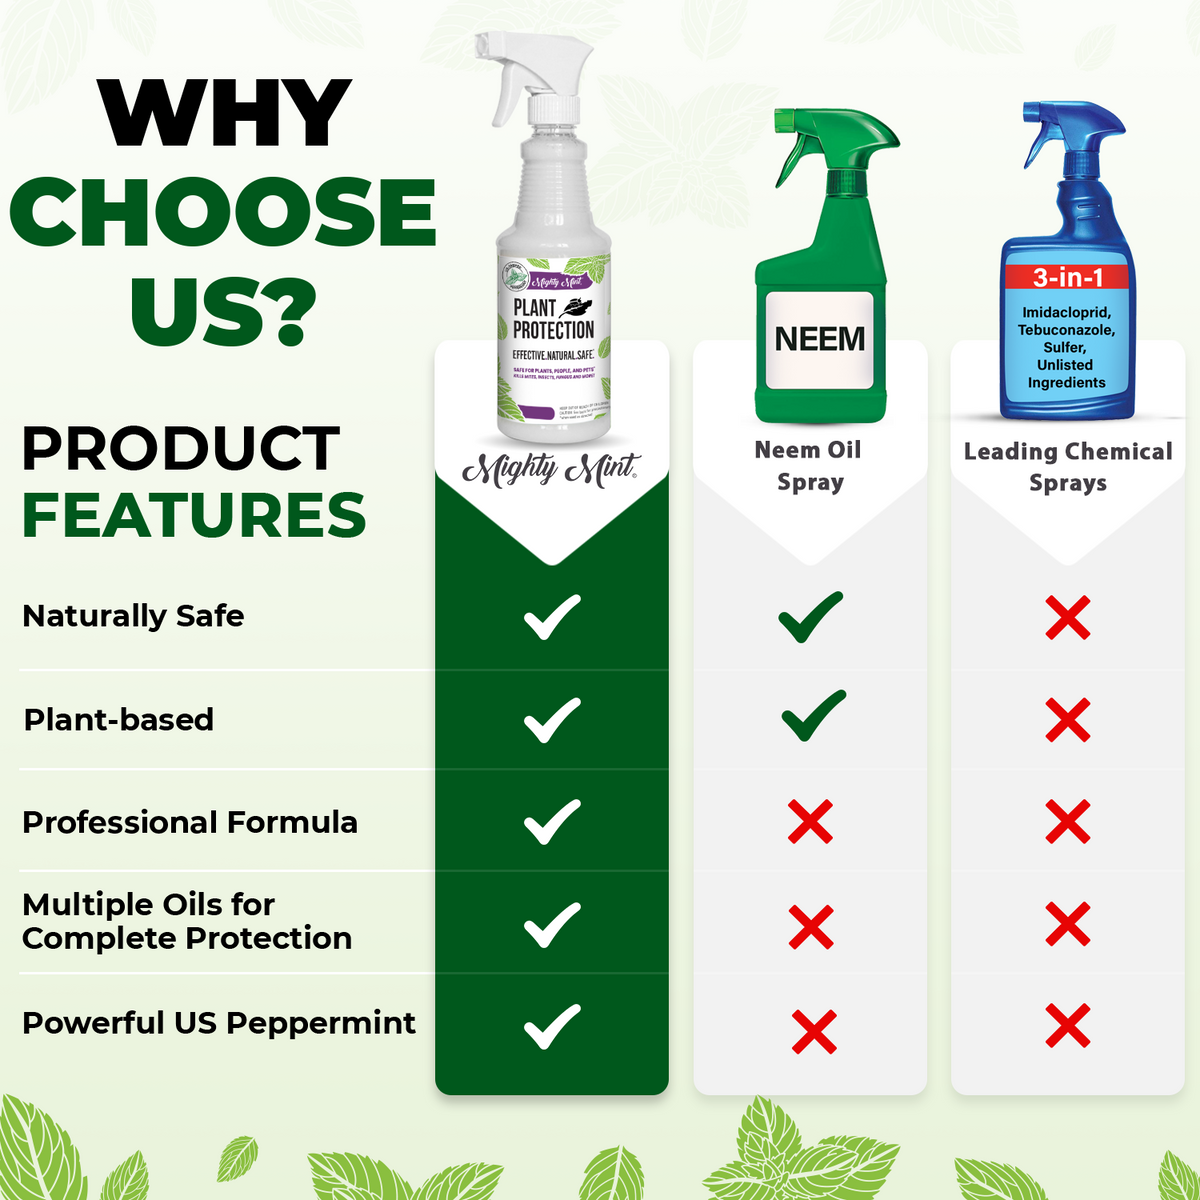 Mighty Mint 32 oz Peppermint Plant Protection Spray - Microfiber Cloth Kit